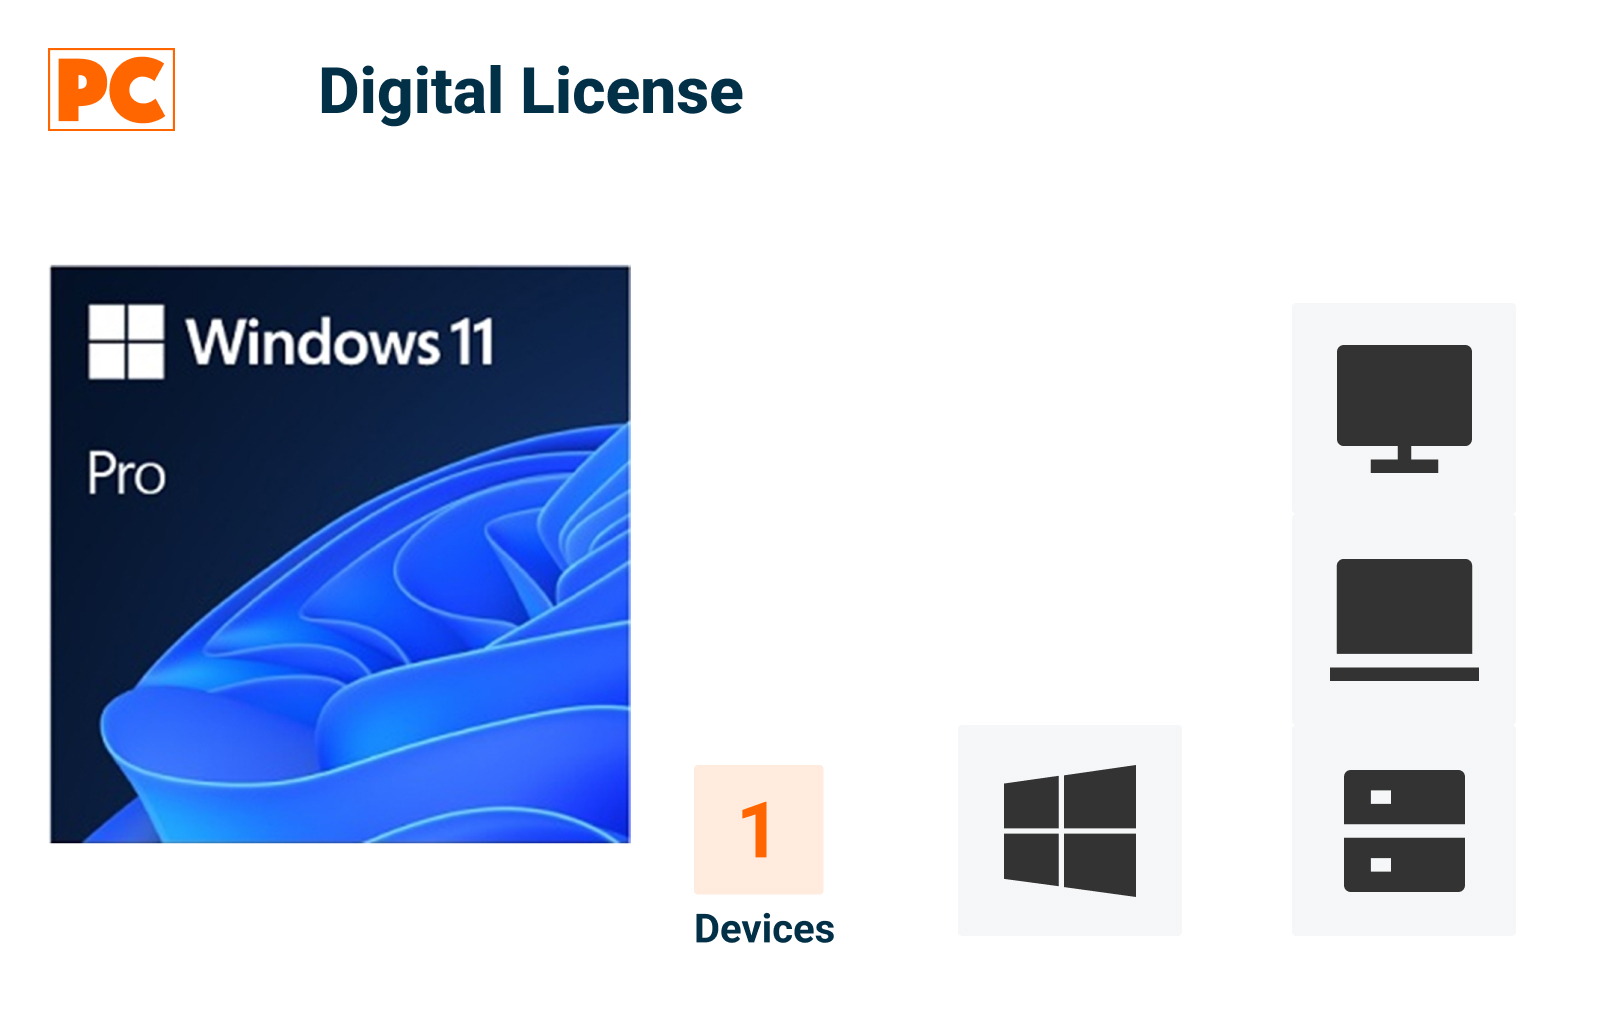 Microsoft Windows 11 Pro Digital Download